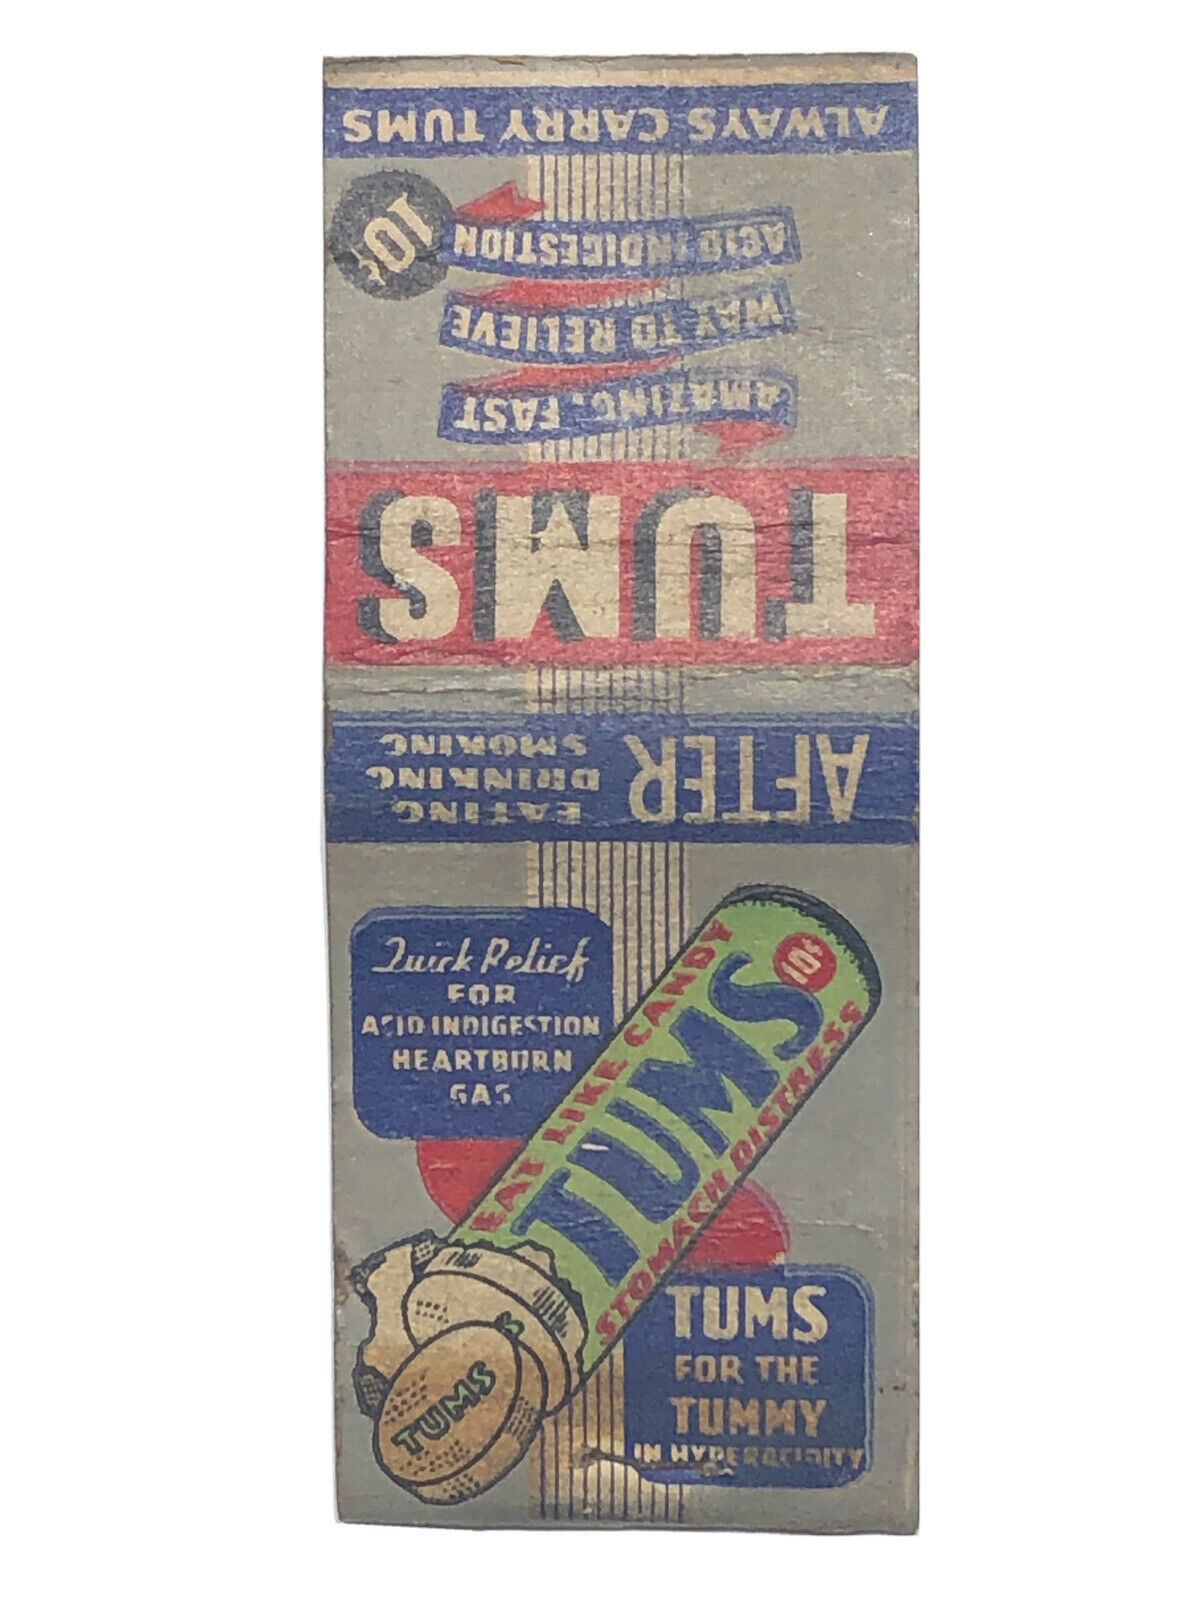 Tums Antacid Heartburn Candy Vintage 50s Advertising Matchbook Cover Matchbox